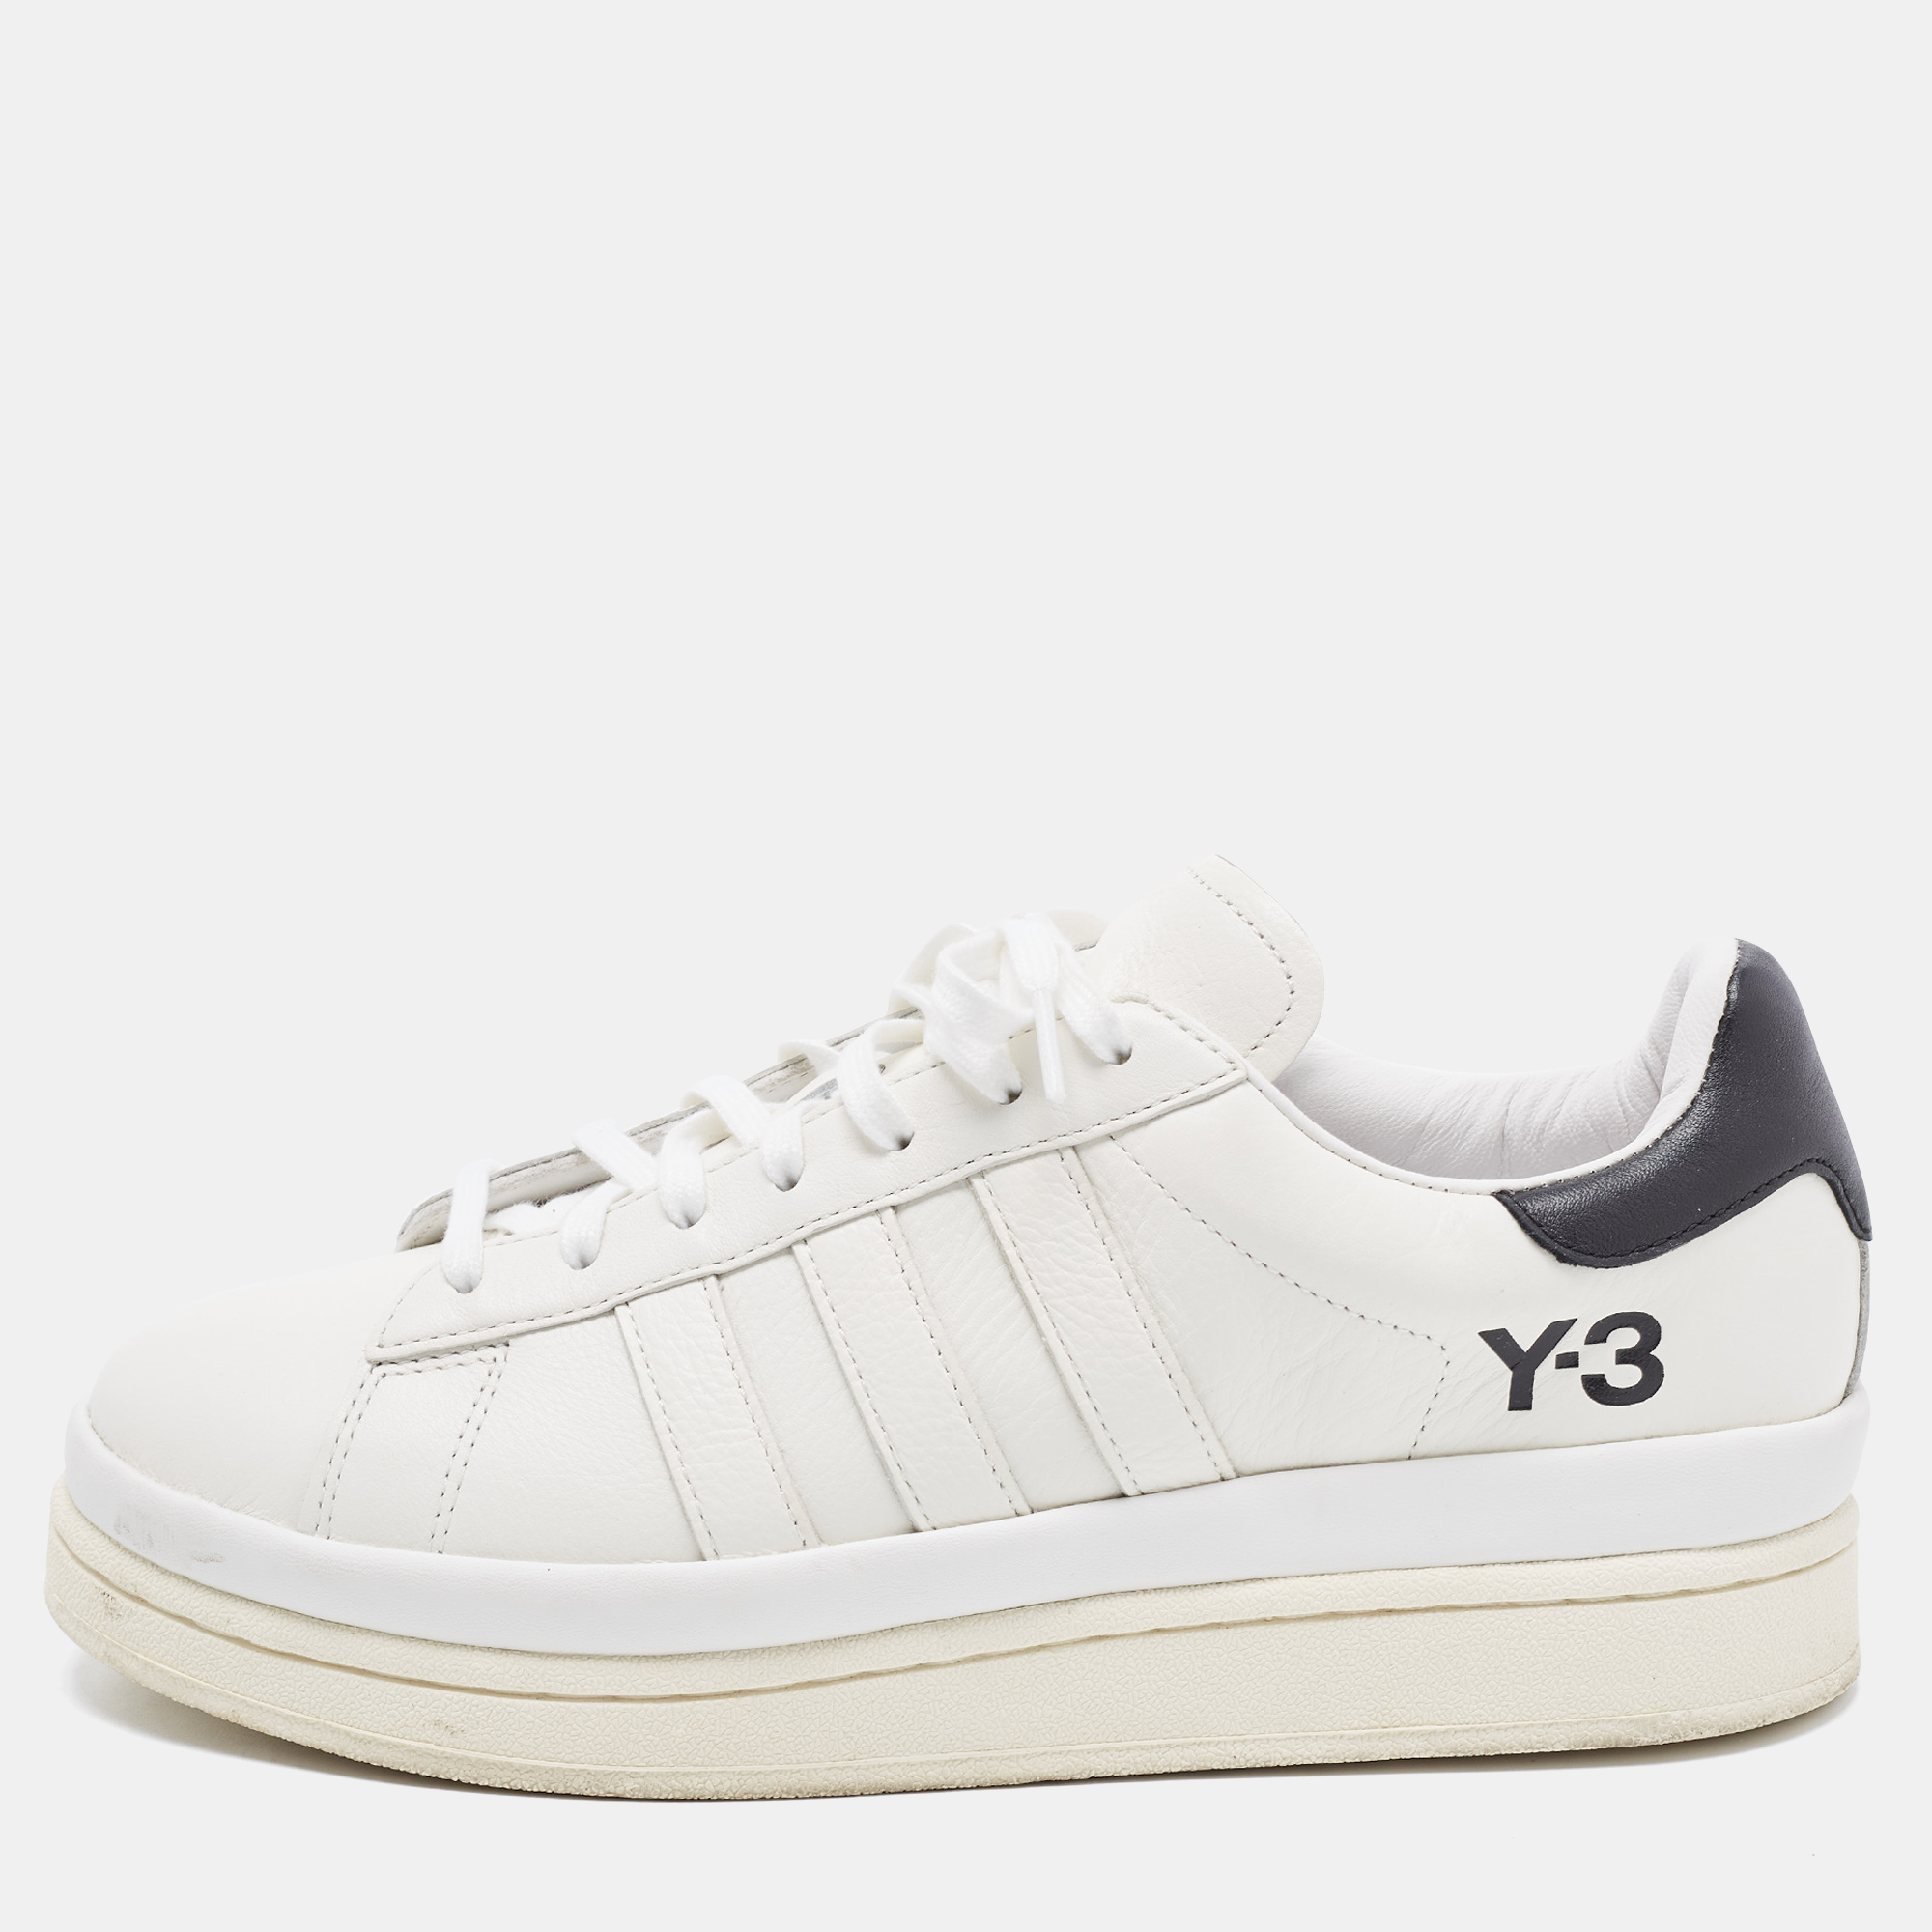 

Y-3 White/Black Leather Yohji Star Low-Top Sneakers Size 42 2/3